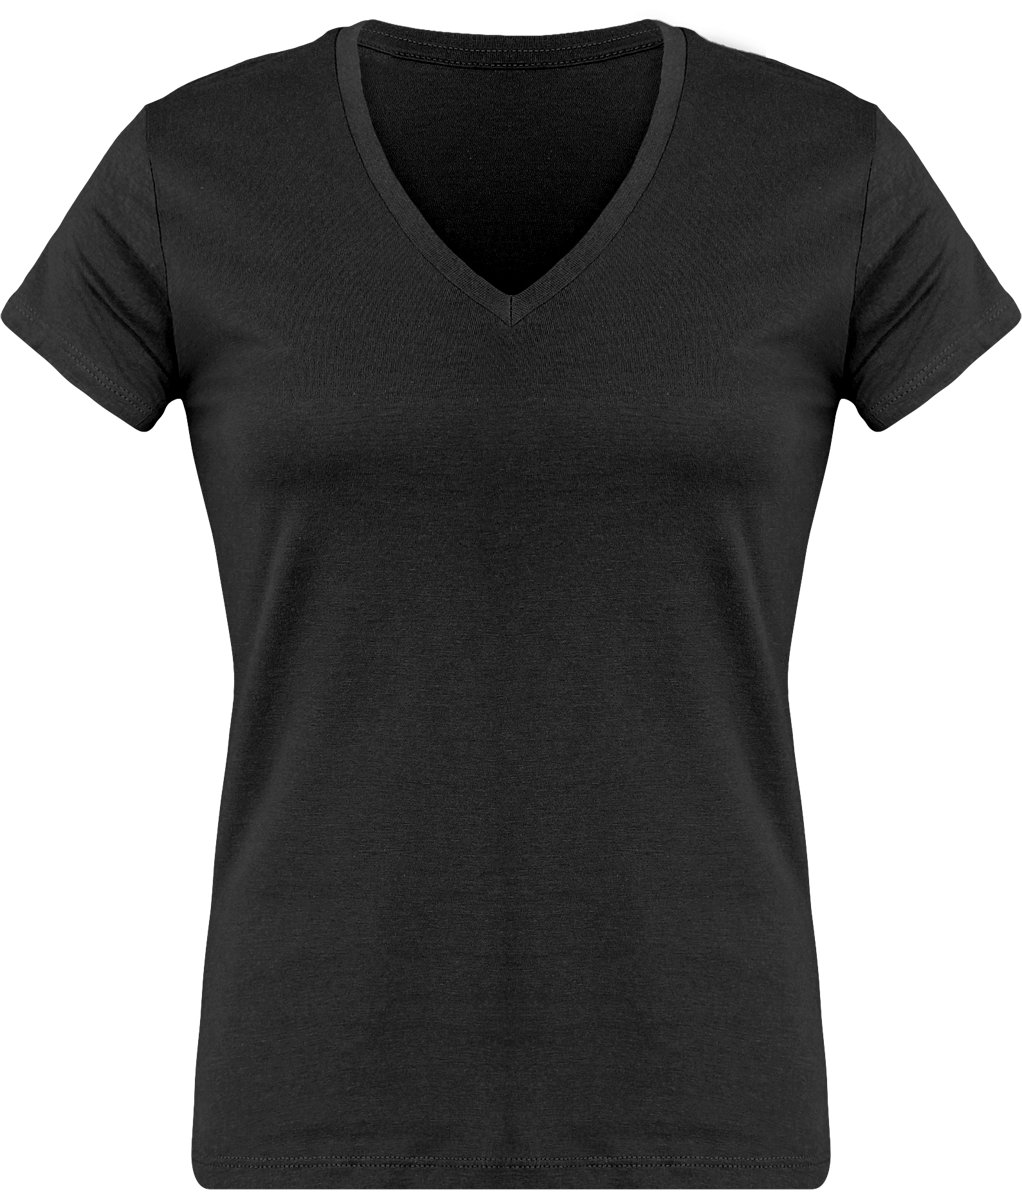 Custom, Feminine And Comfortable Women's T-Shirt With V-Neck Dark Grey